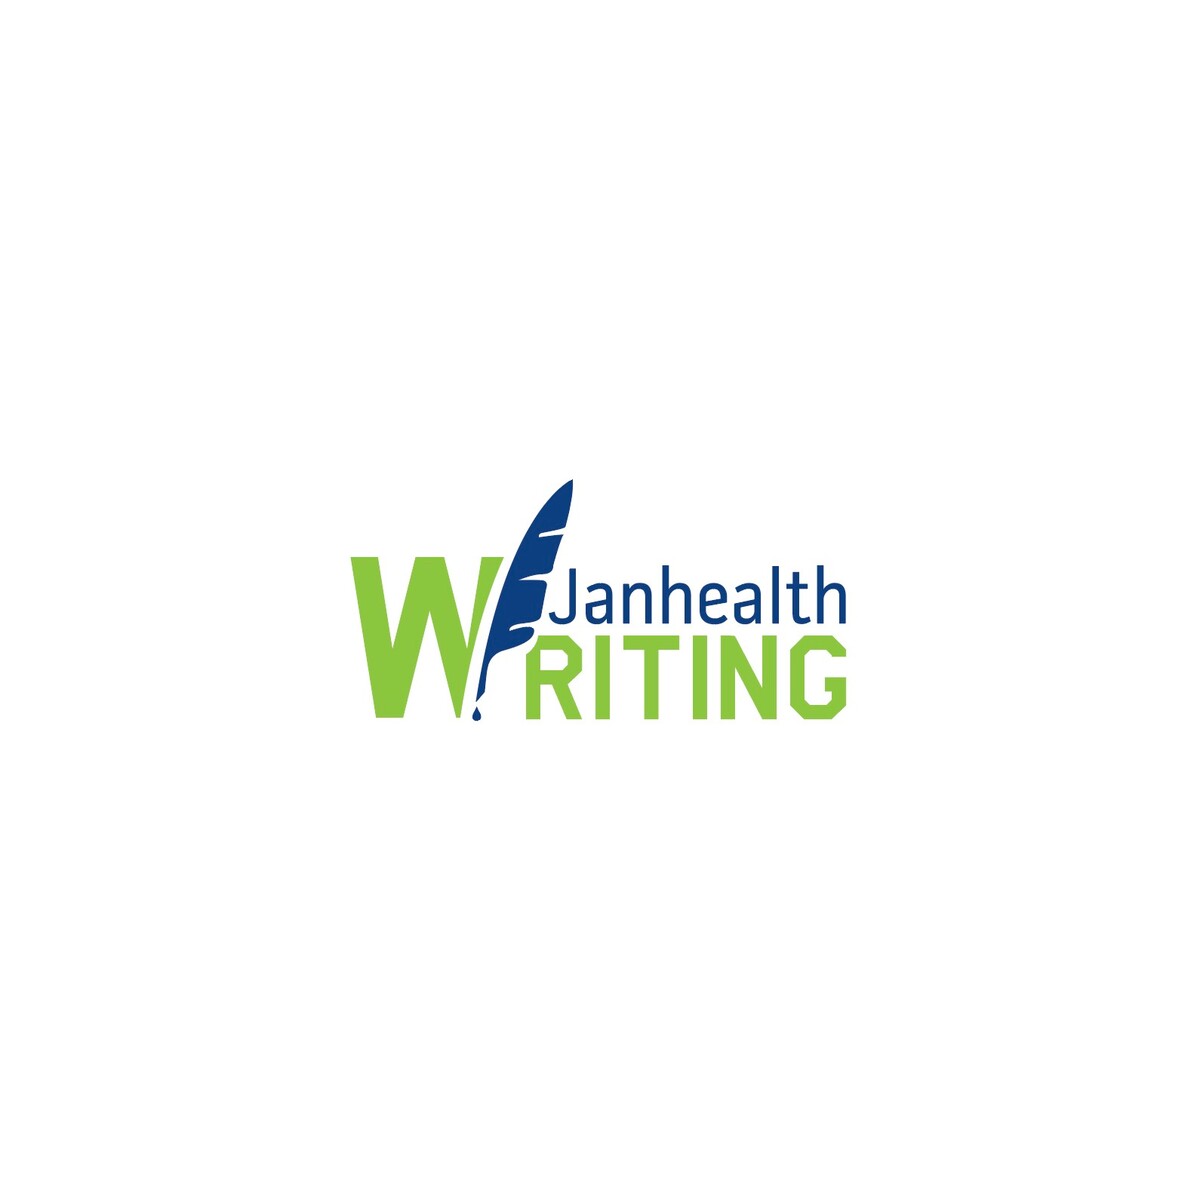 Janhealth Writing Service